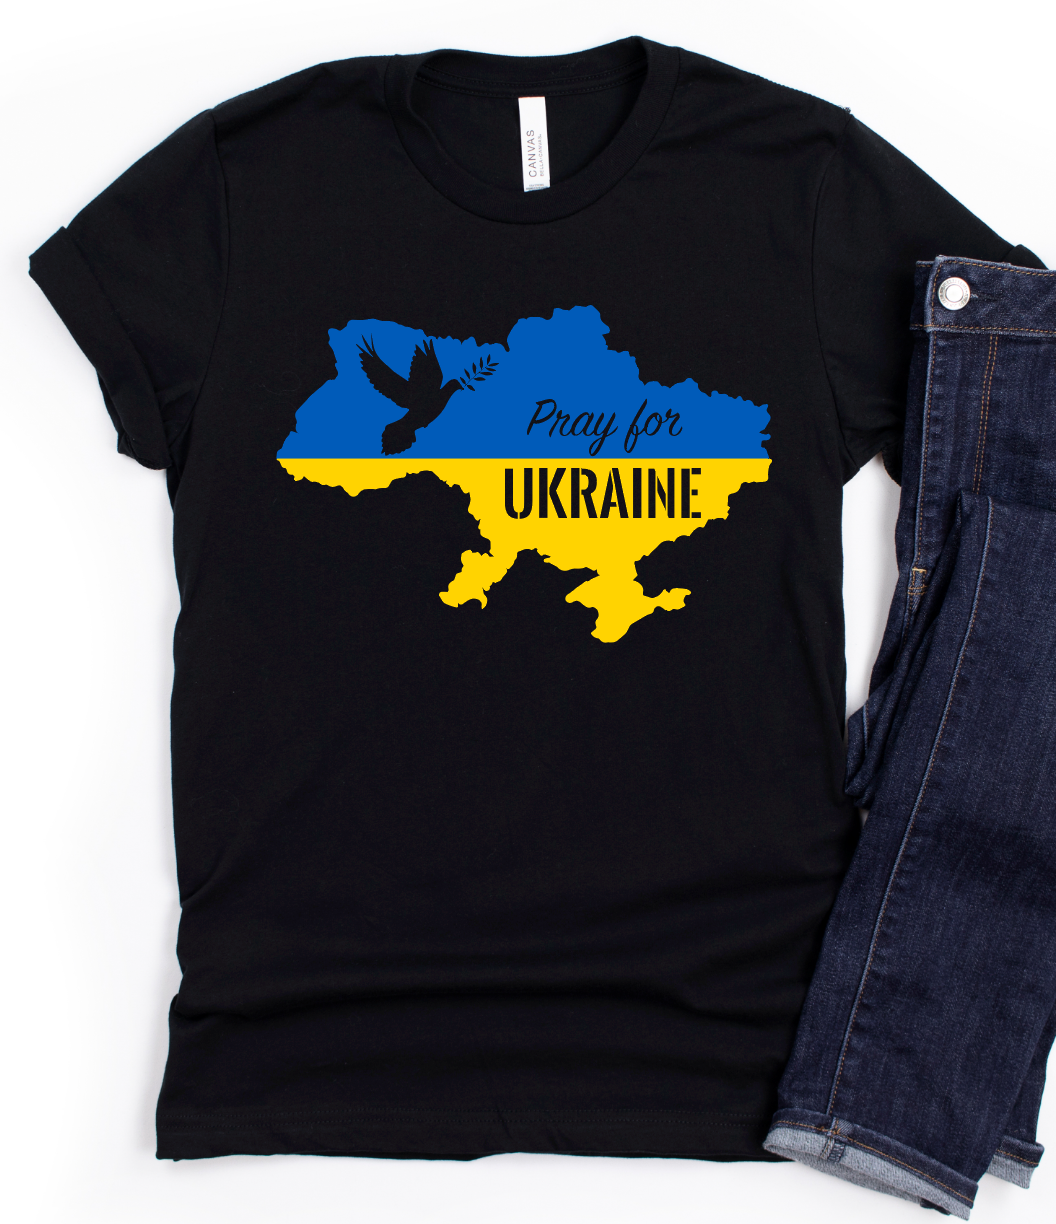 Pray for Ukraine Tee